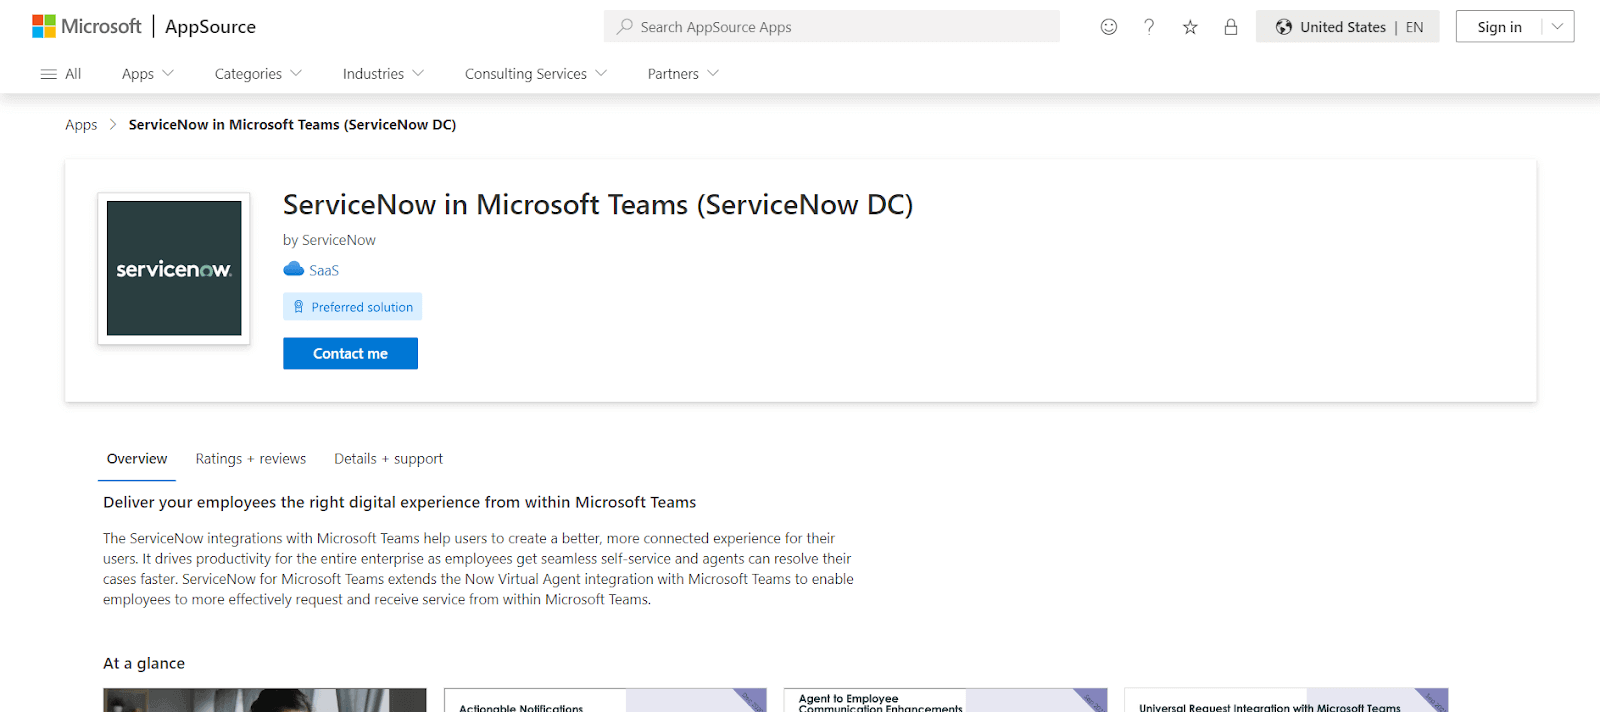 SеrvicеNow in Microsoft Teams (ServiceNow DC)